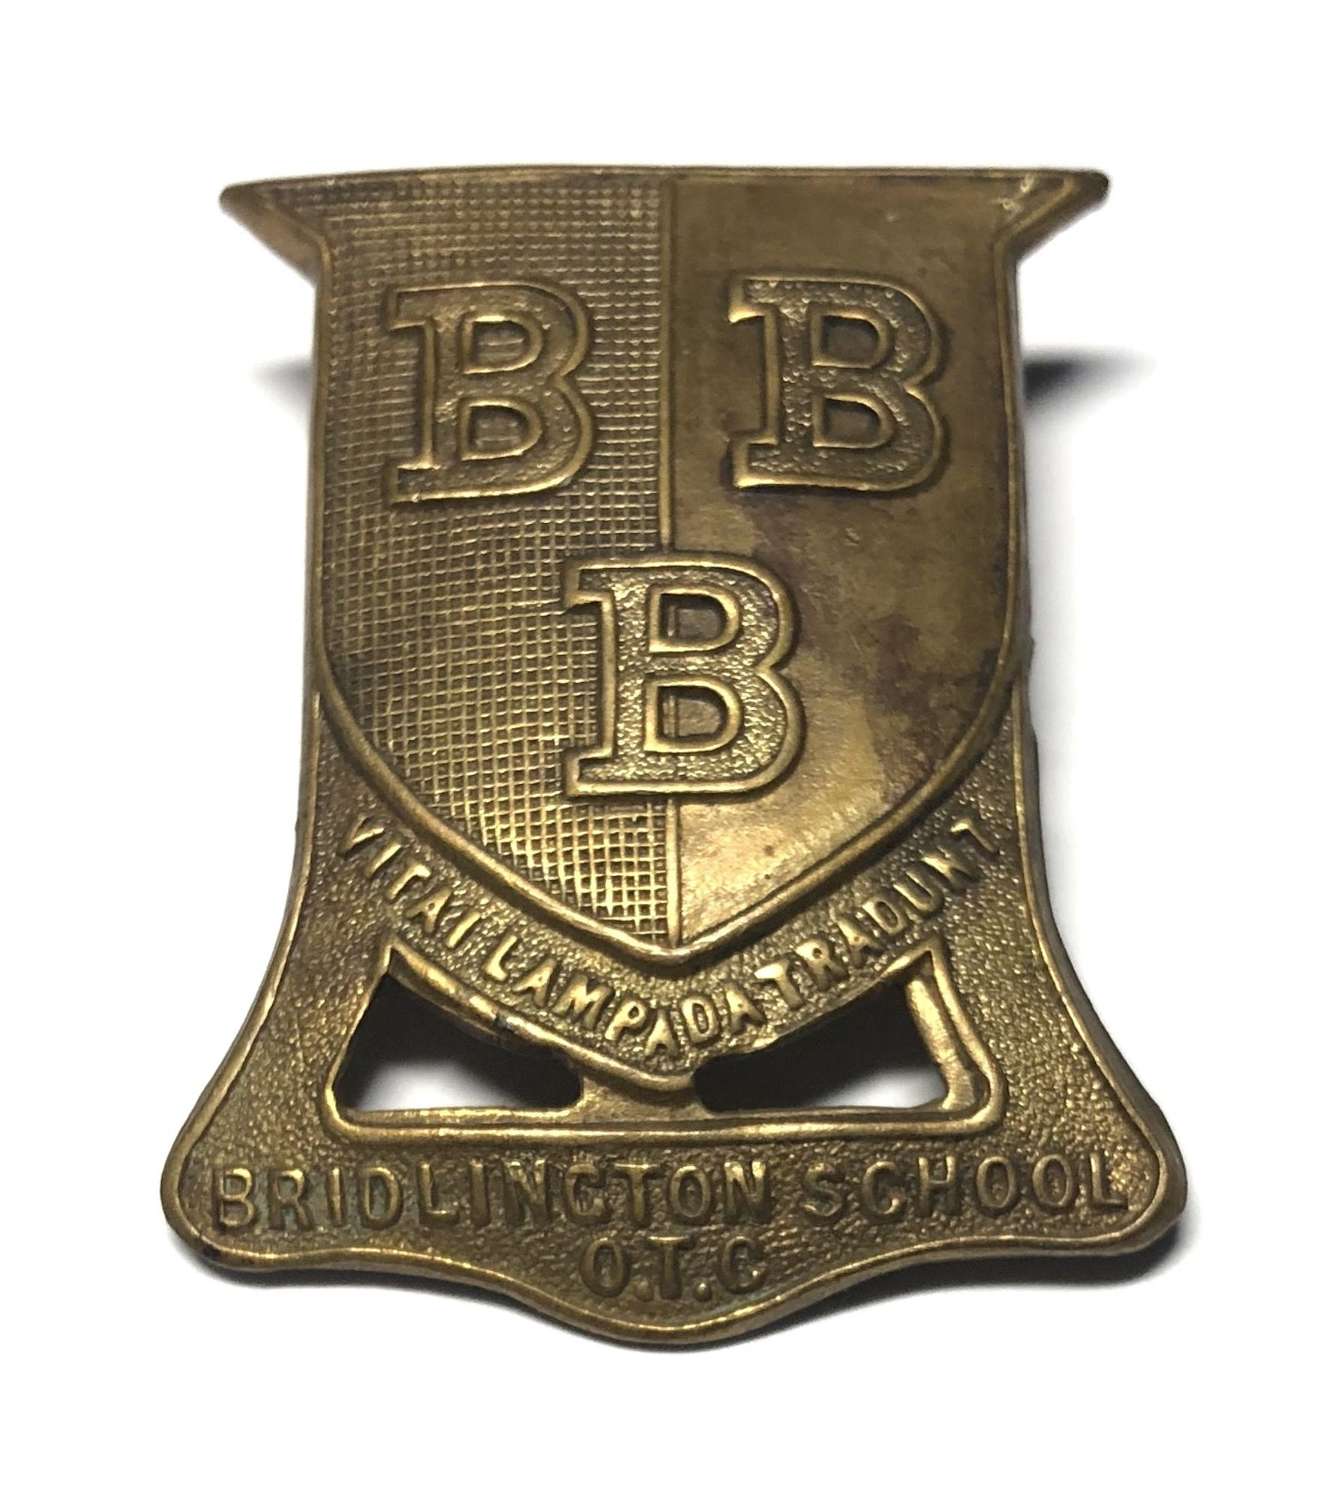 Bridlington School OTC cap badge